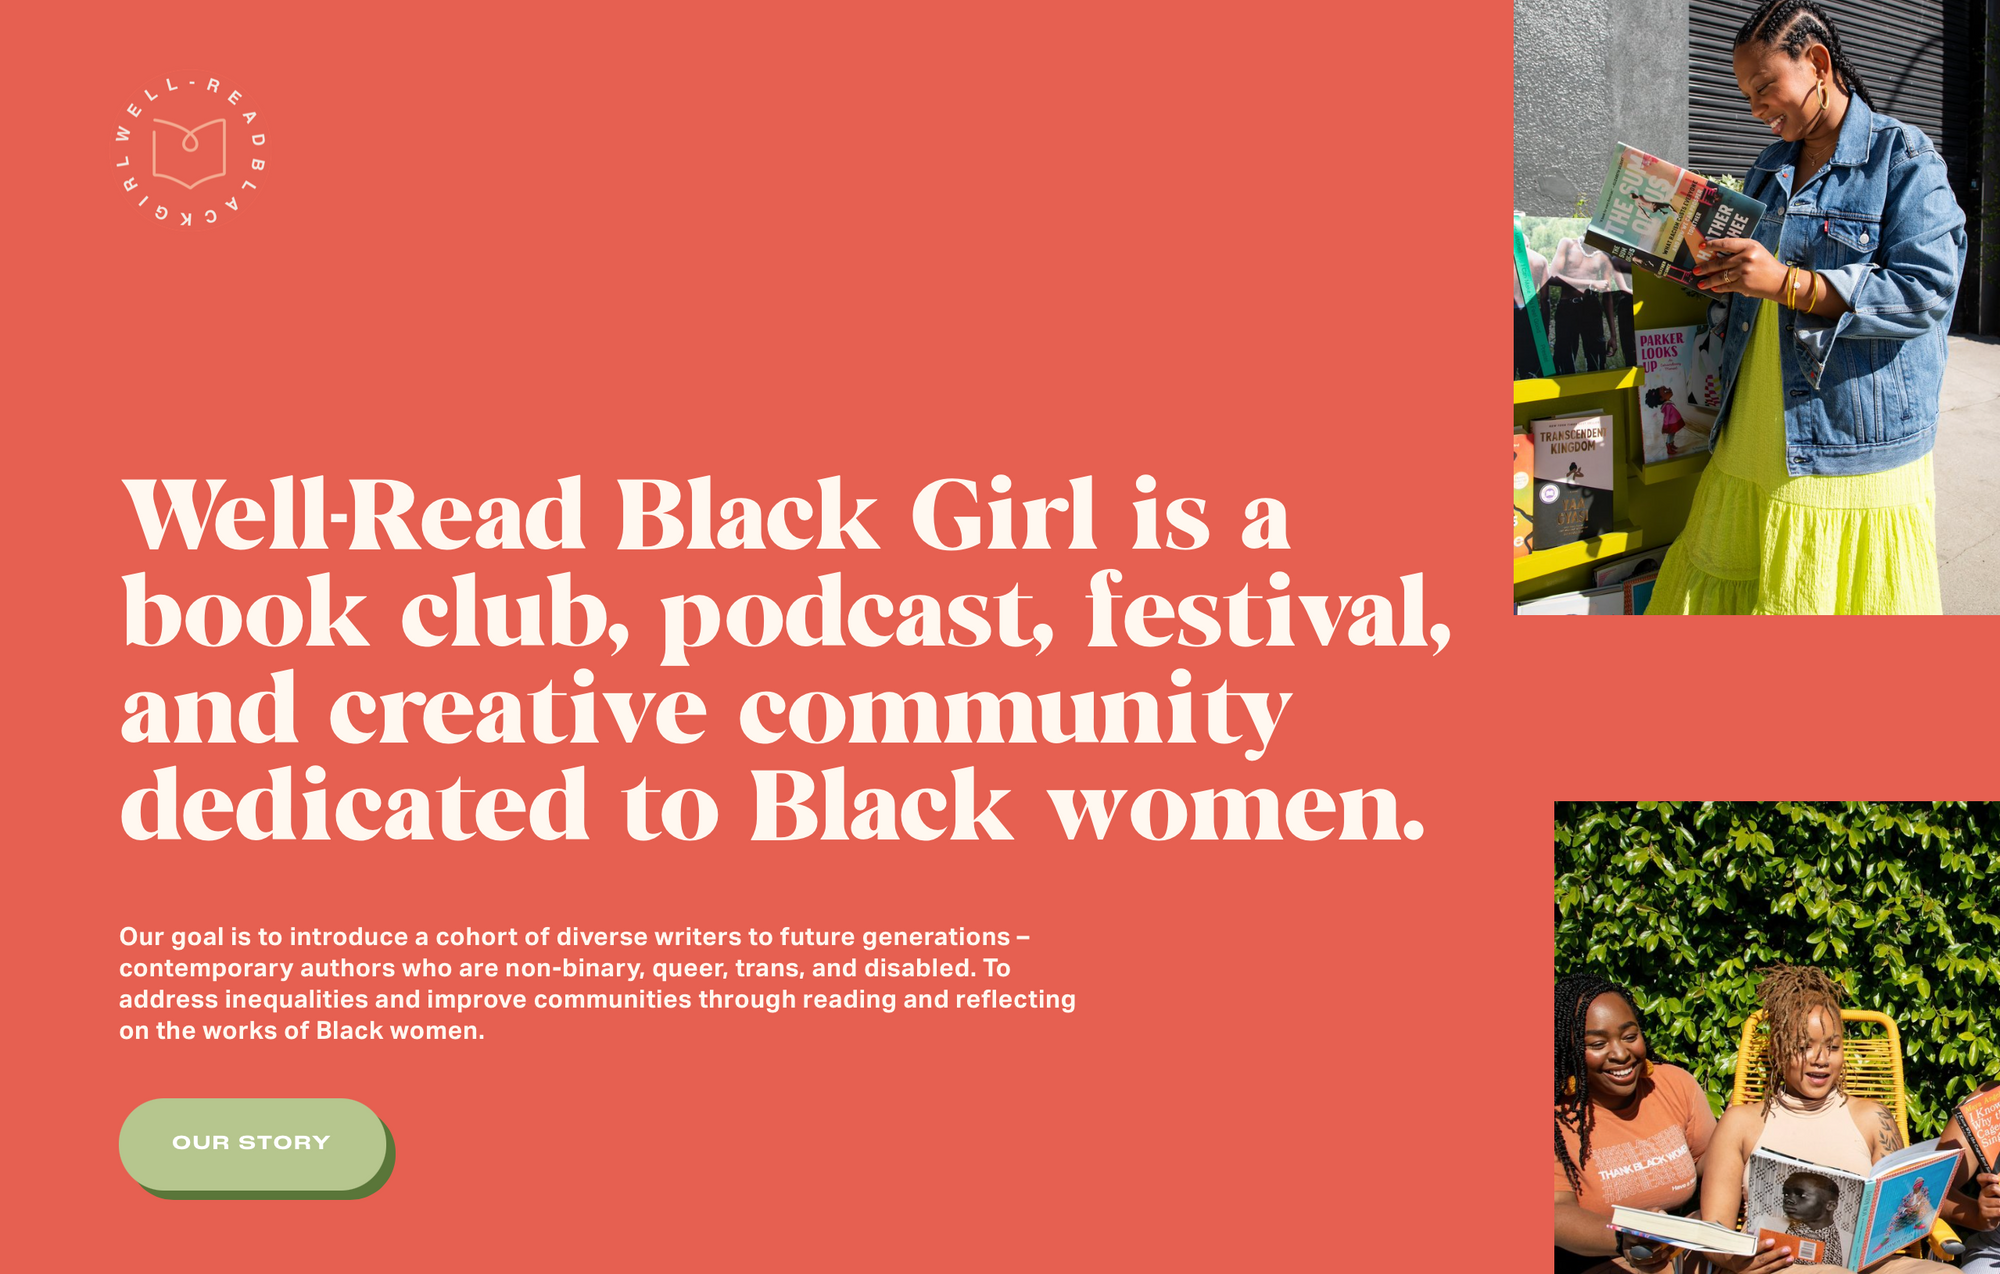 Well-Read Black Girl' Is Bigger Than Glory Edim - The New York Times